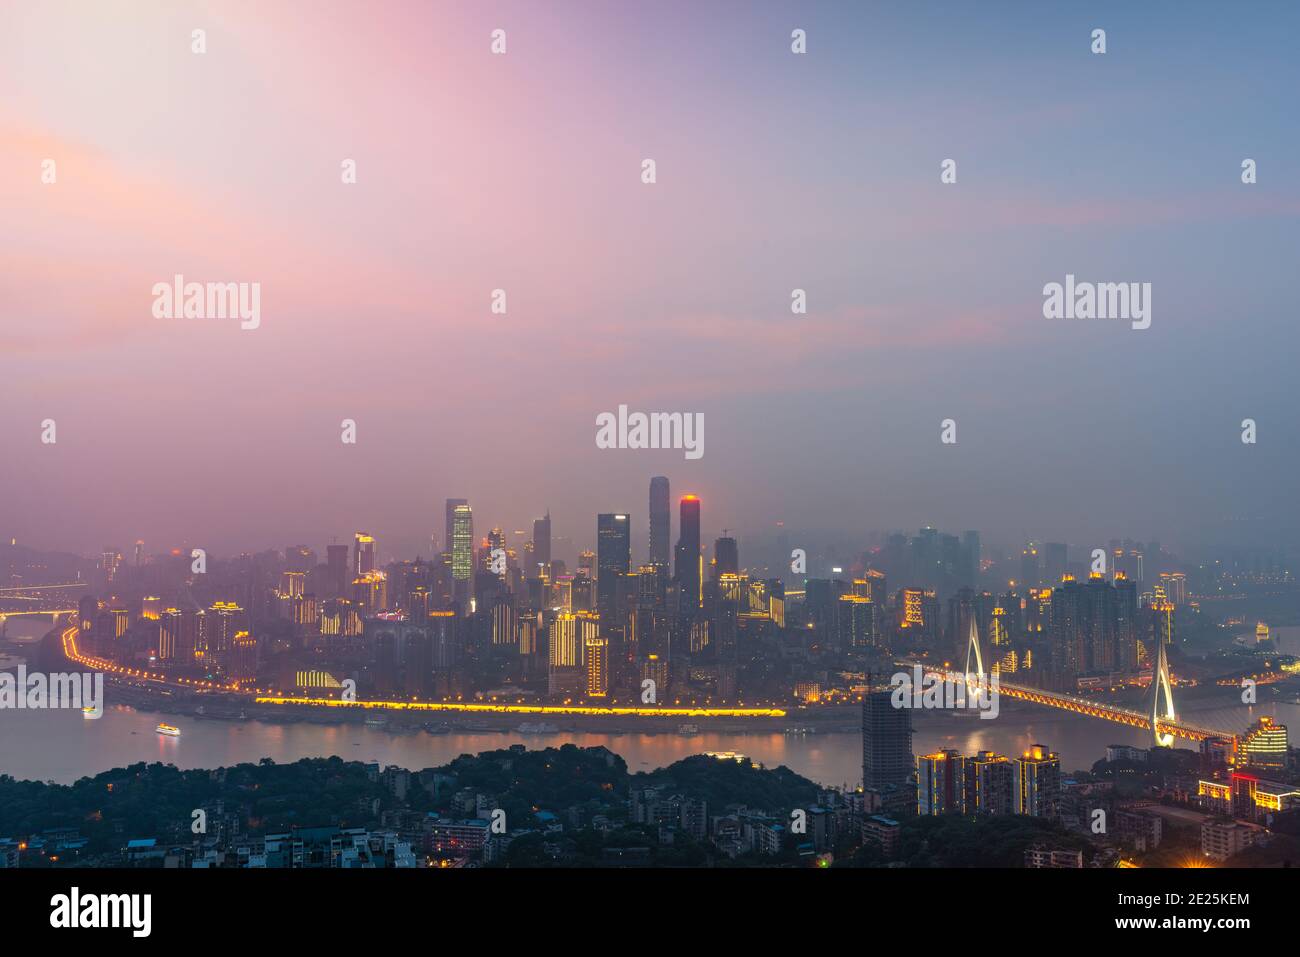 Chongqing, China downtown city skyline over the Yangtze River at sunset. Stock Photo